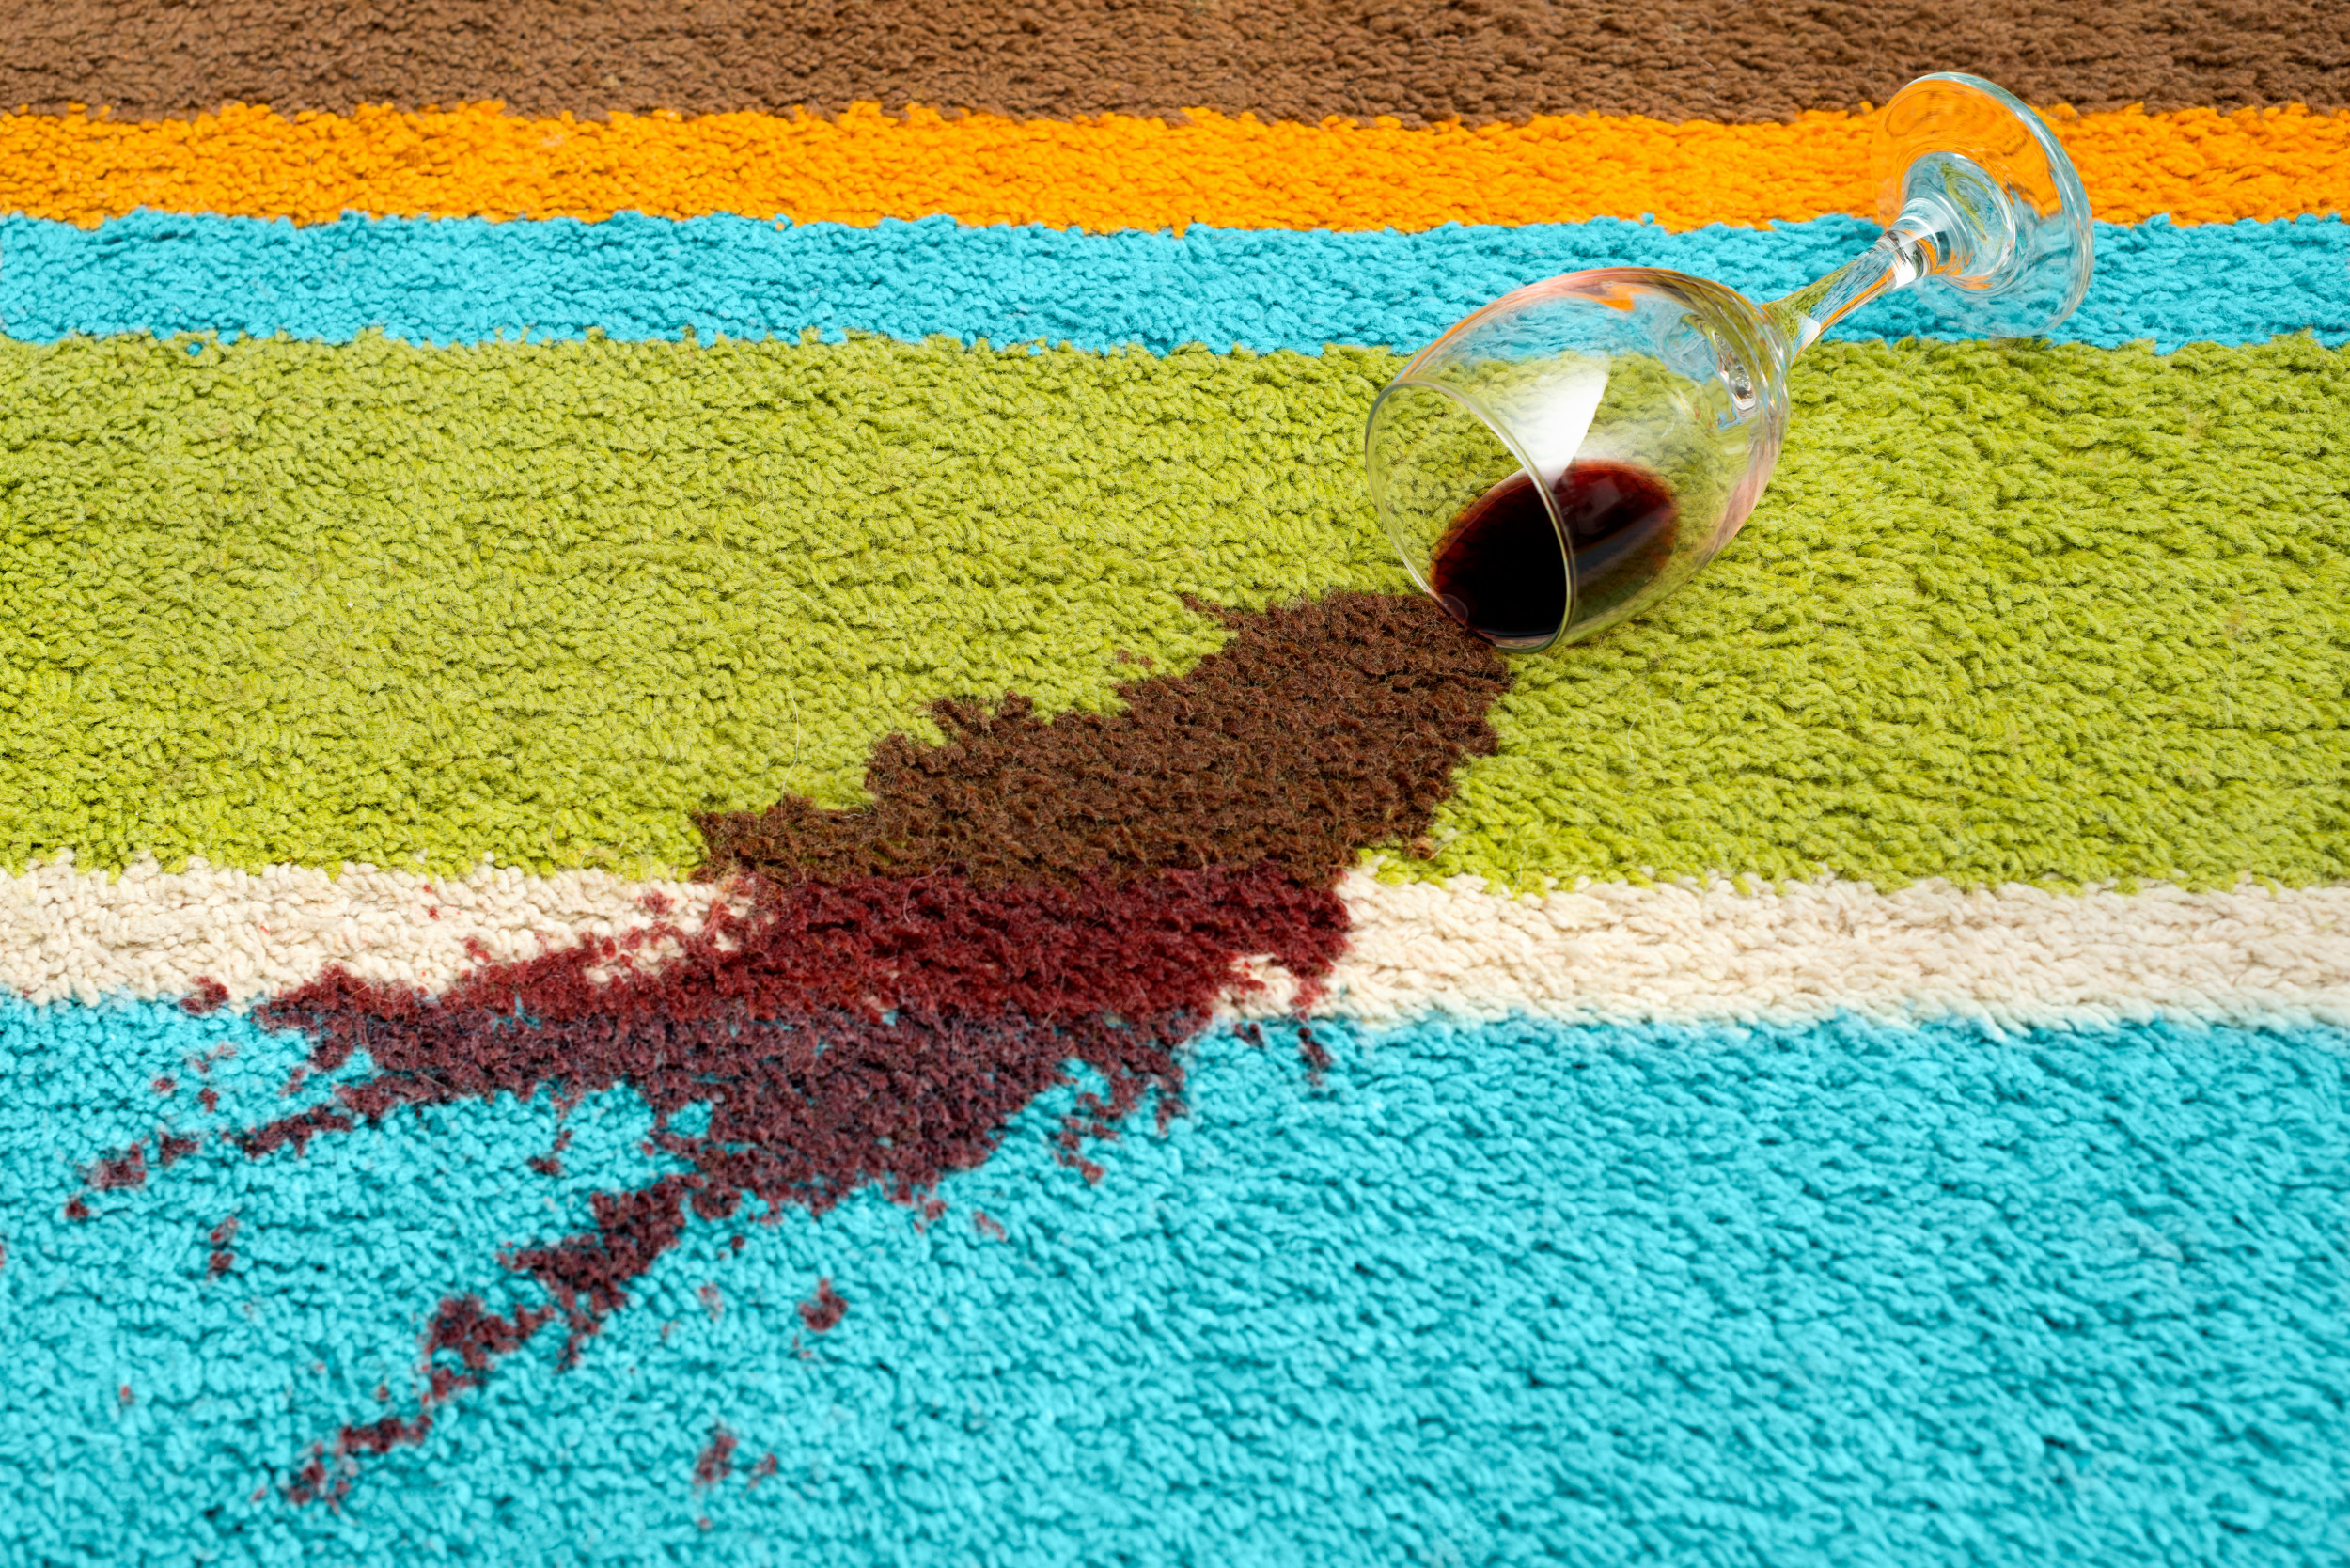 Internet Chuckles As Gran Bleaches Wacky Design Into Carpet To Hide Spill